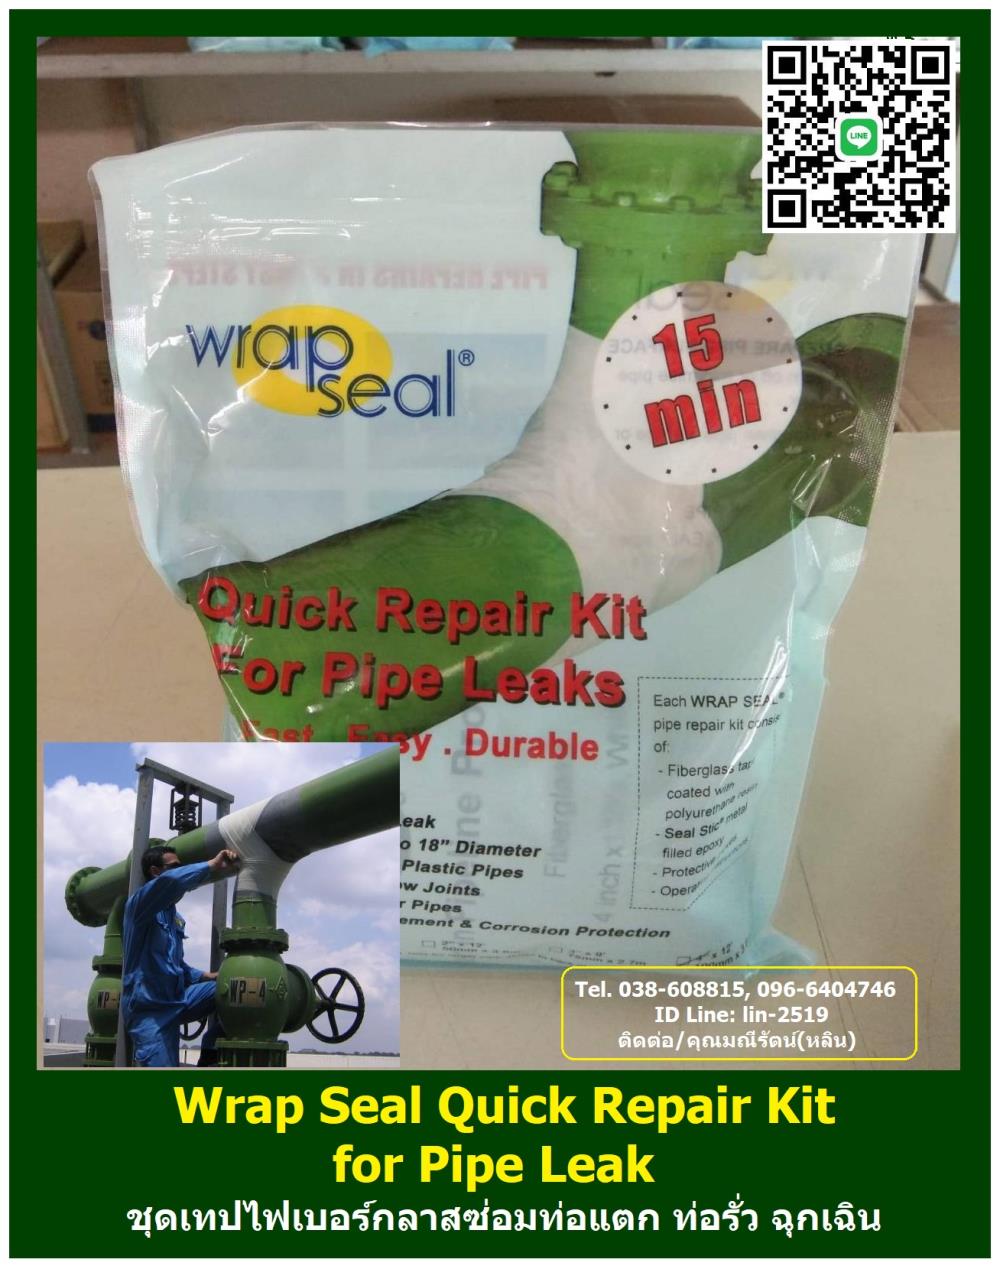 Wrap Seal Quick Repair Kit for Pipe Leak เทปซ่อมท่อรั่วฉุกเฉิน ชุดซ่อมท่อ เทปไฟเบอร์กลาสซ่อมท่อรั่ว,ชุดซ่อมท่อรั่ว, เทปซ่อมท่อฉุกเฉิน, เทปไฟเบอร์กลาสซ่อมท่อรั่ว, Wrap seal Repair kit, Repair pipe leak, Wrap Seal, ซ่อมท่อแตกรั่ว,,Wrap Seal,Industrial Services/Repair and Maintenance